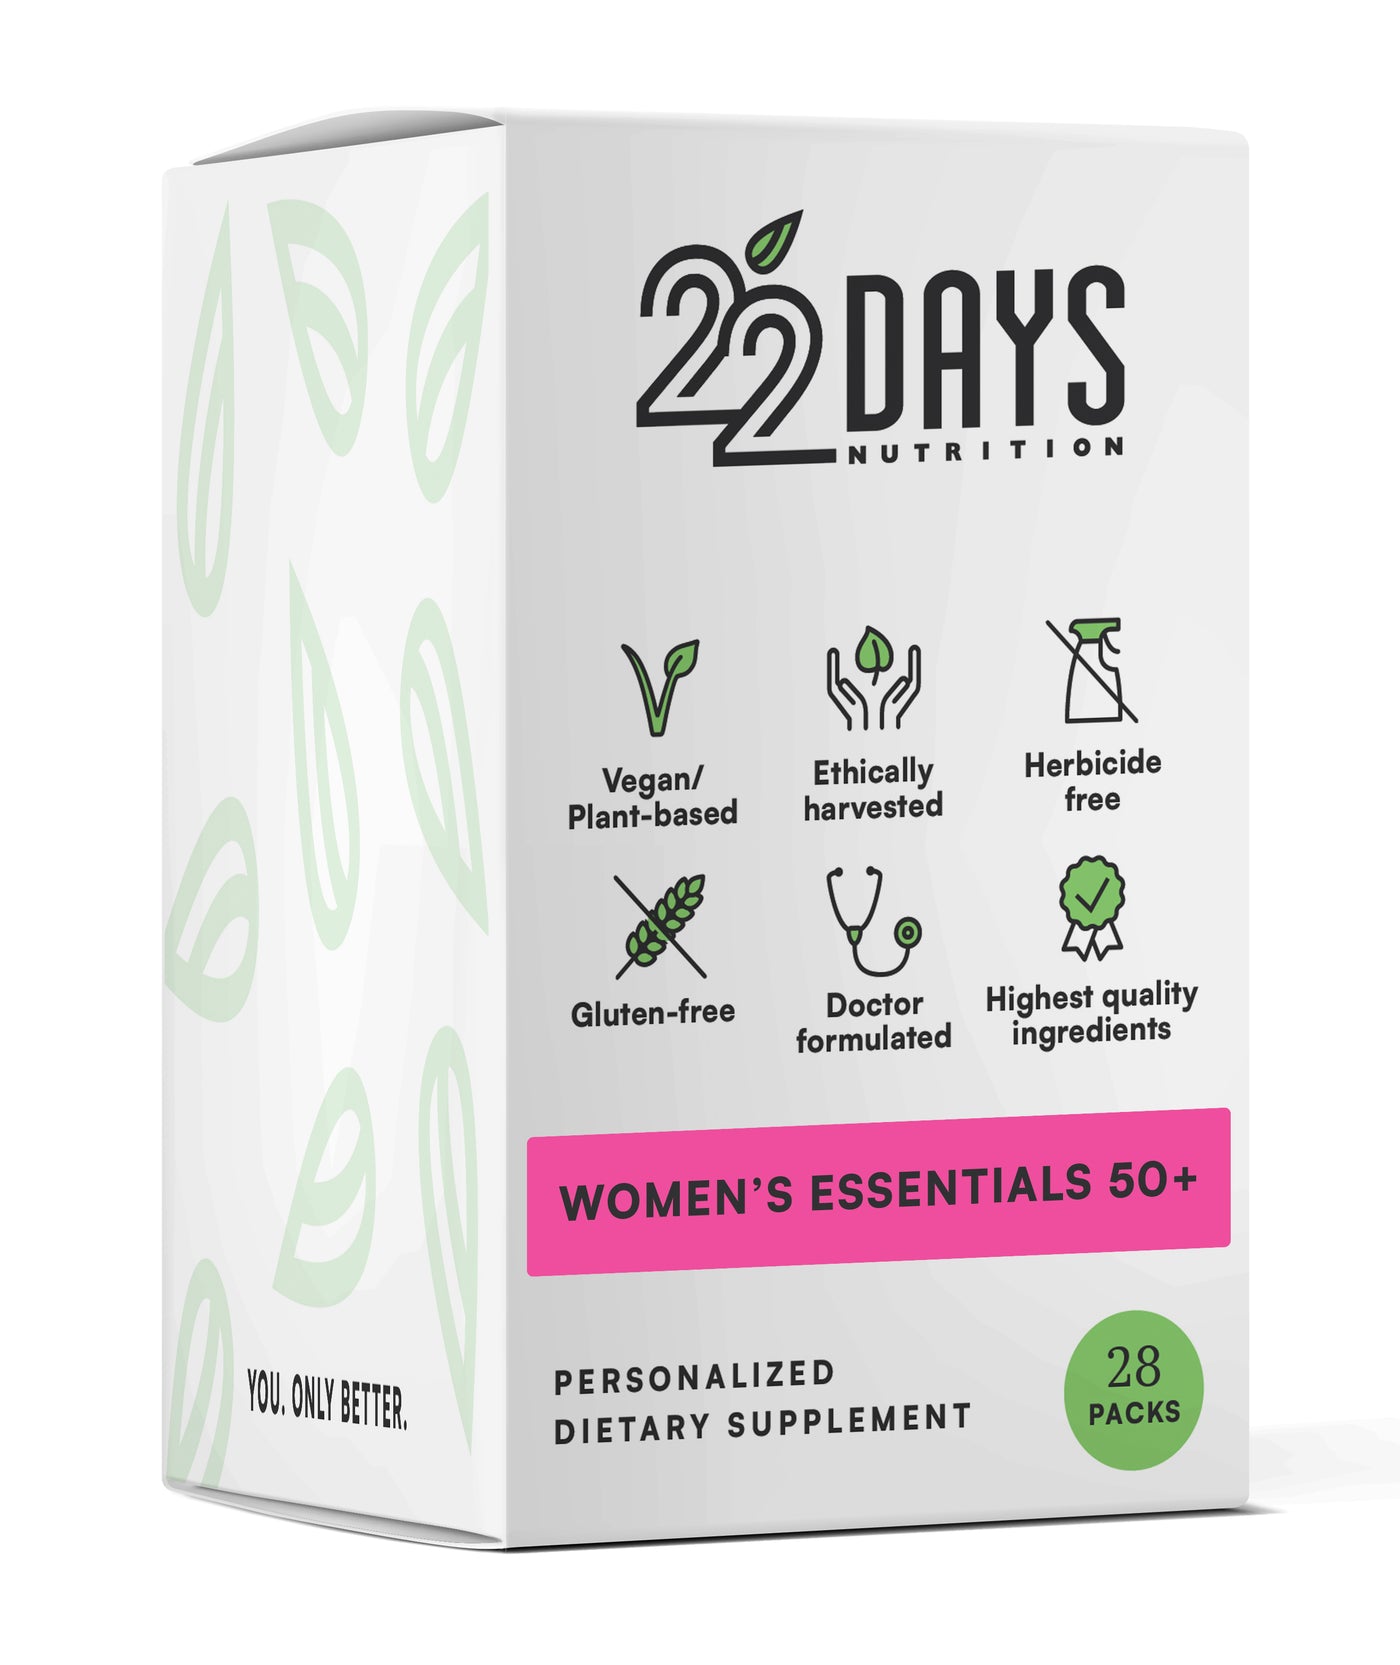 Women's Essentials 50+ Supplement Pack